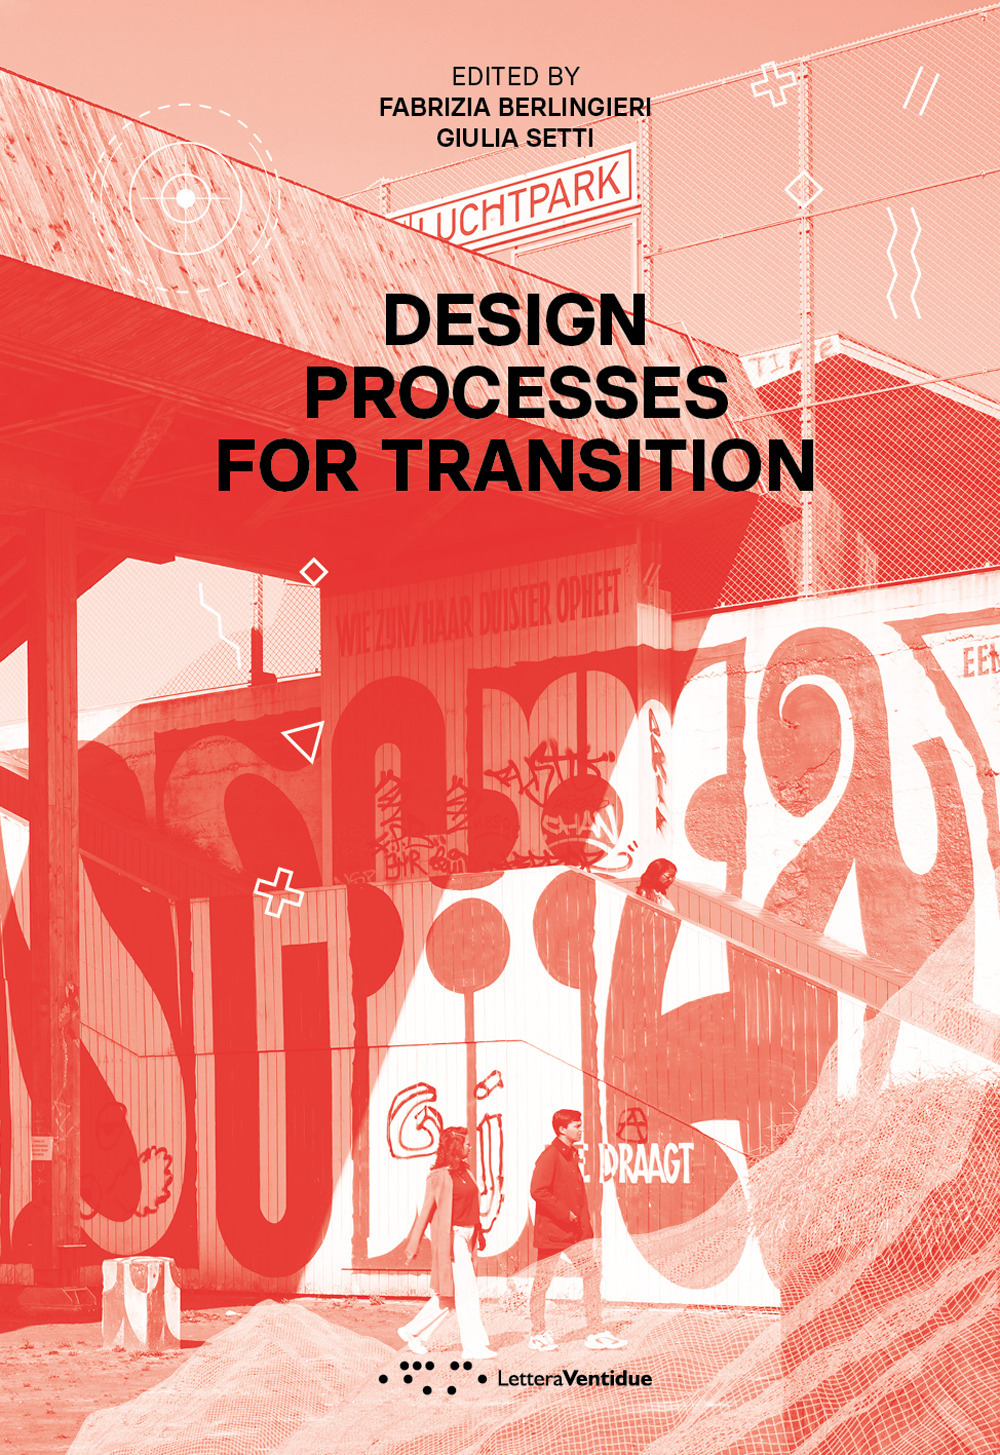 Design processes for transition